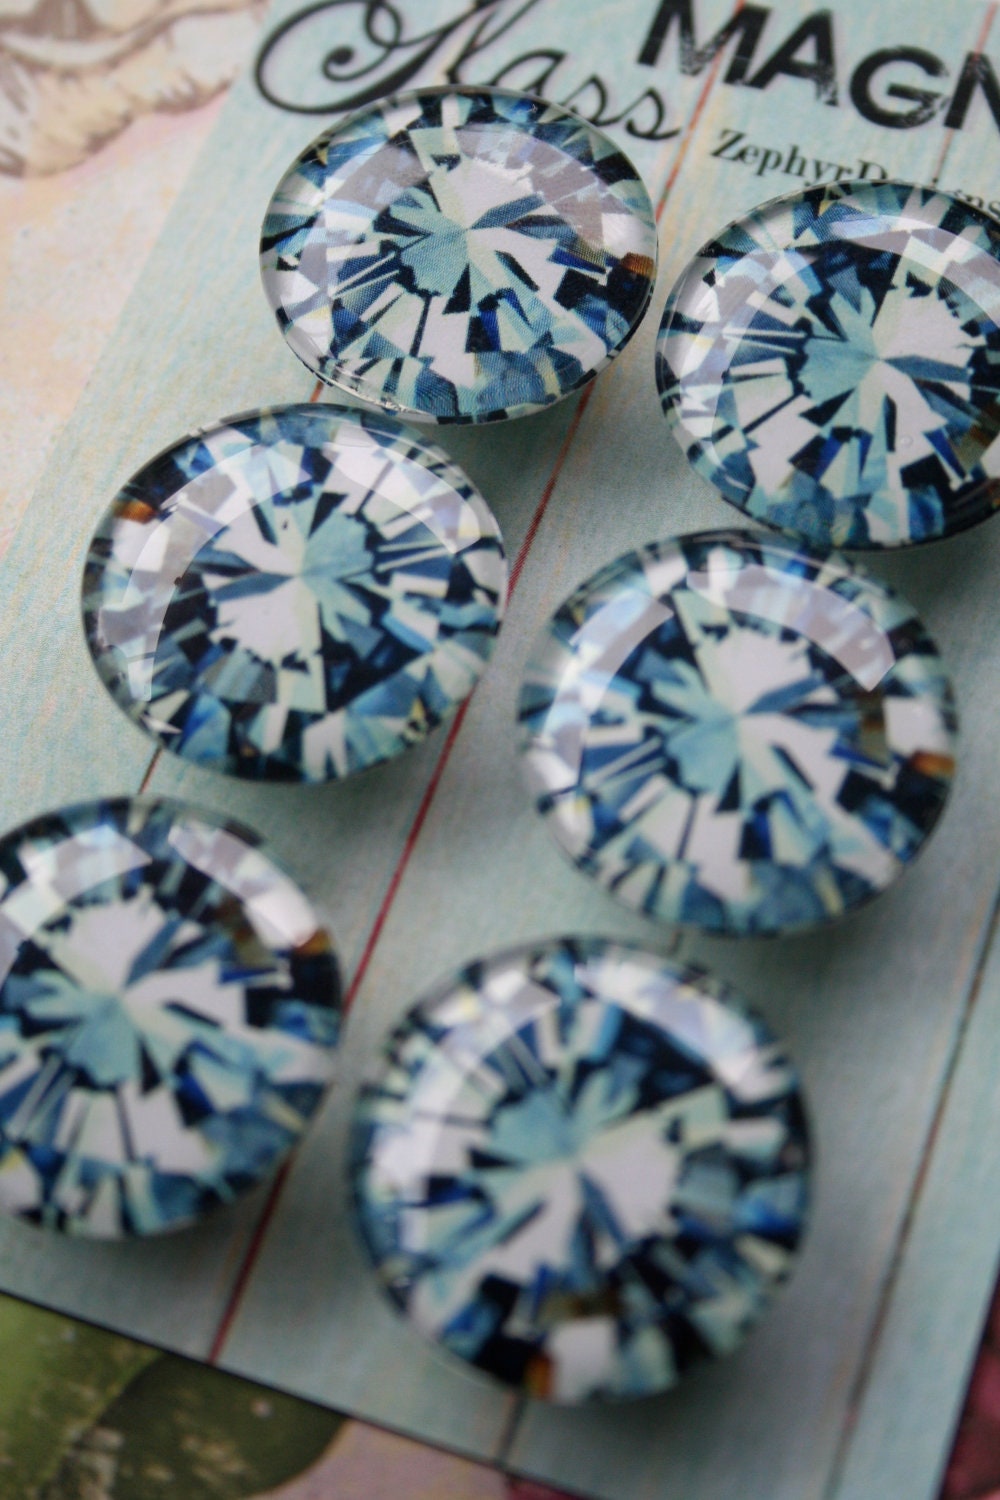 Glass Magnets - Diamonds - ZephyrDesignsAlaska